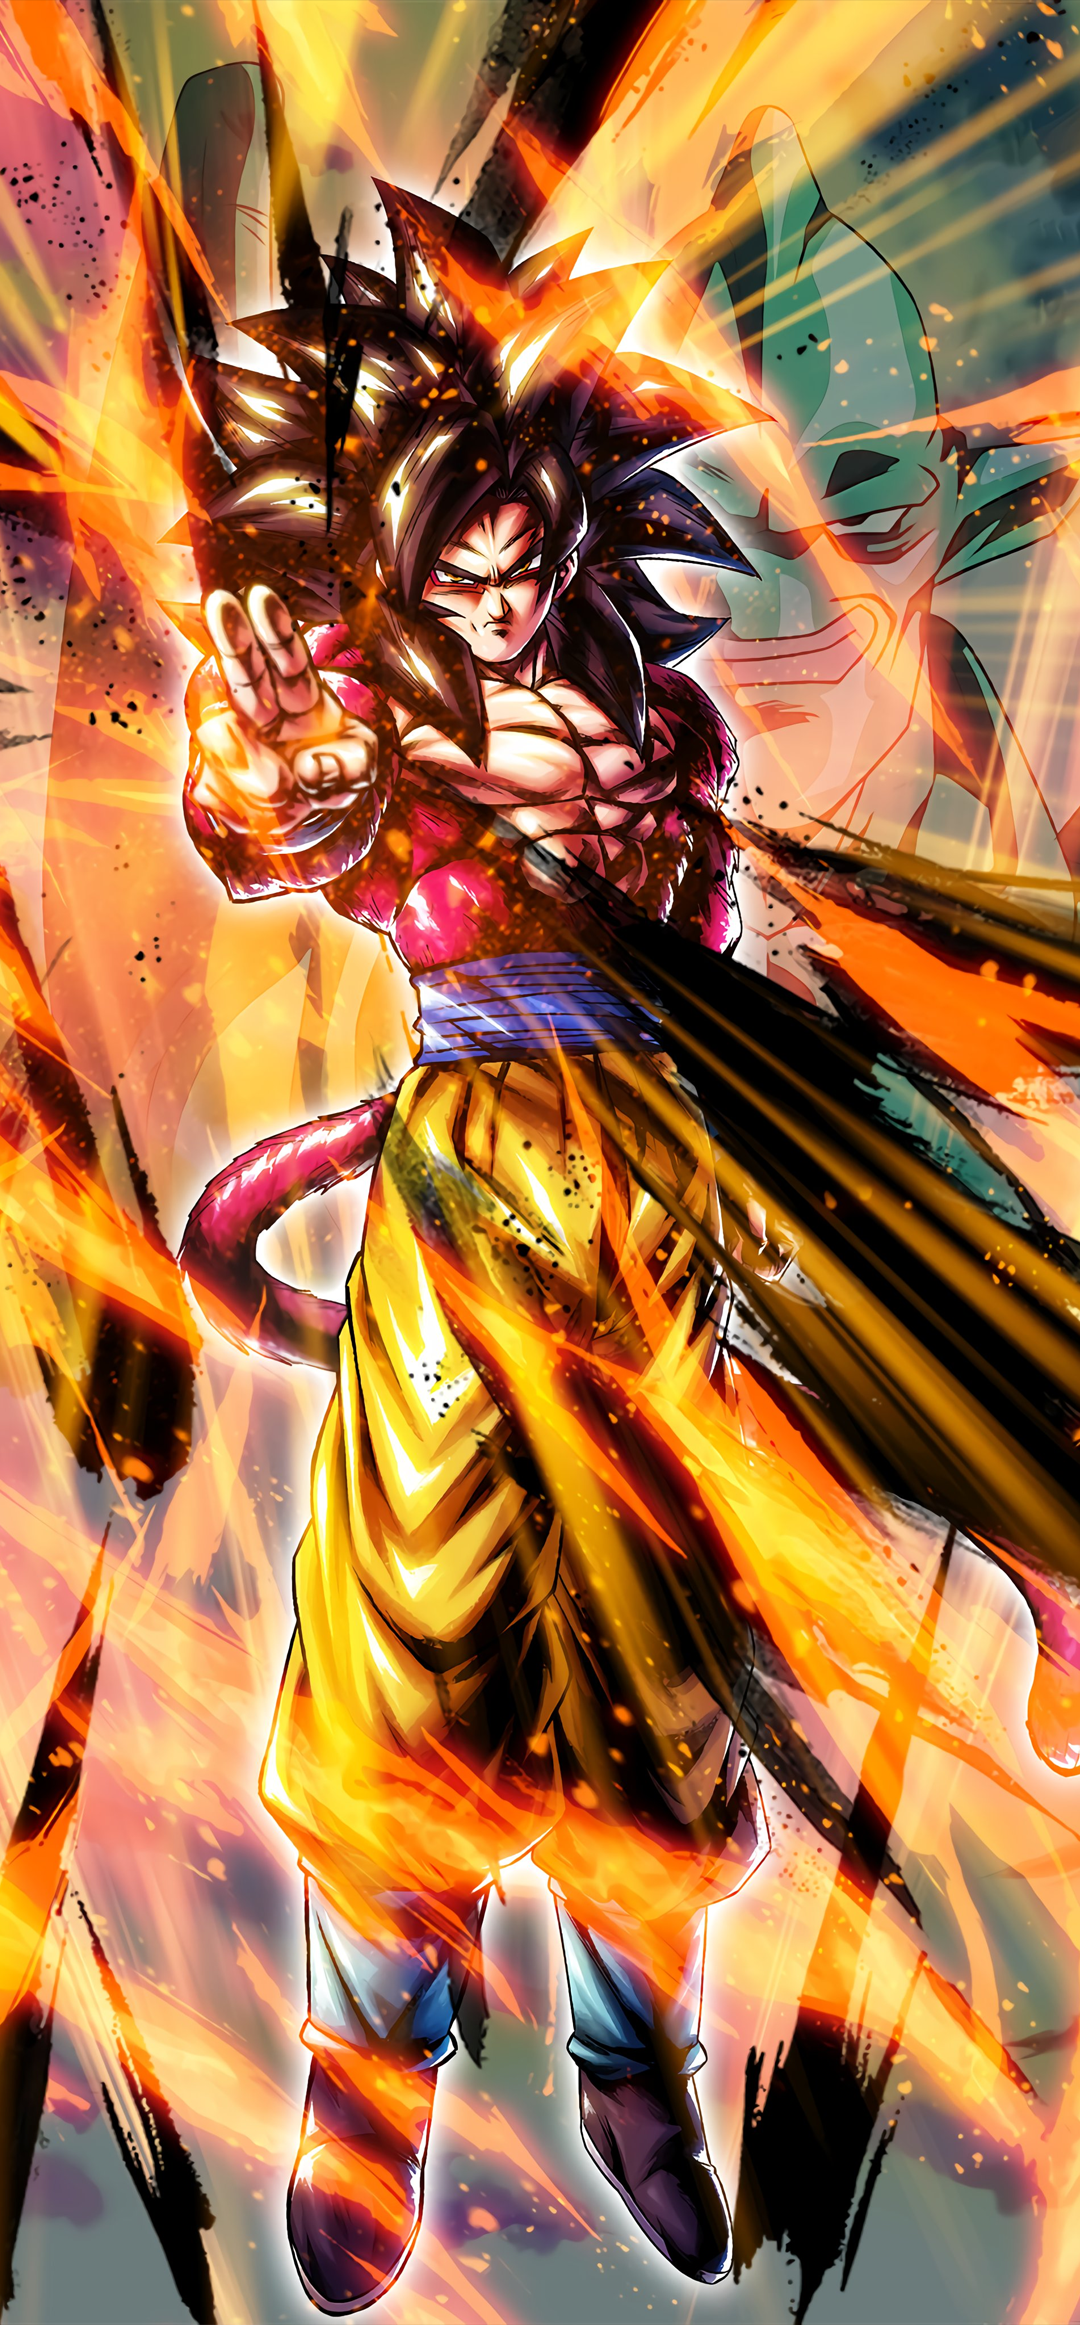 SP Super Saiyan 4 Goku (Purple)  Dragon Ball Legends Wiki - GamePress